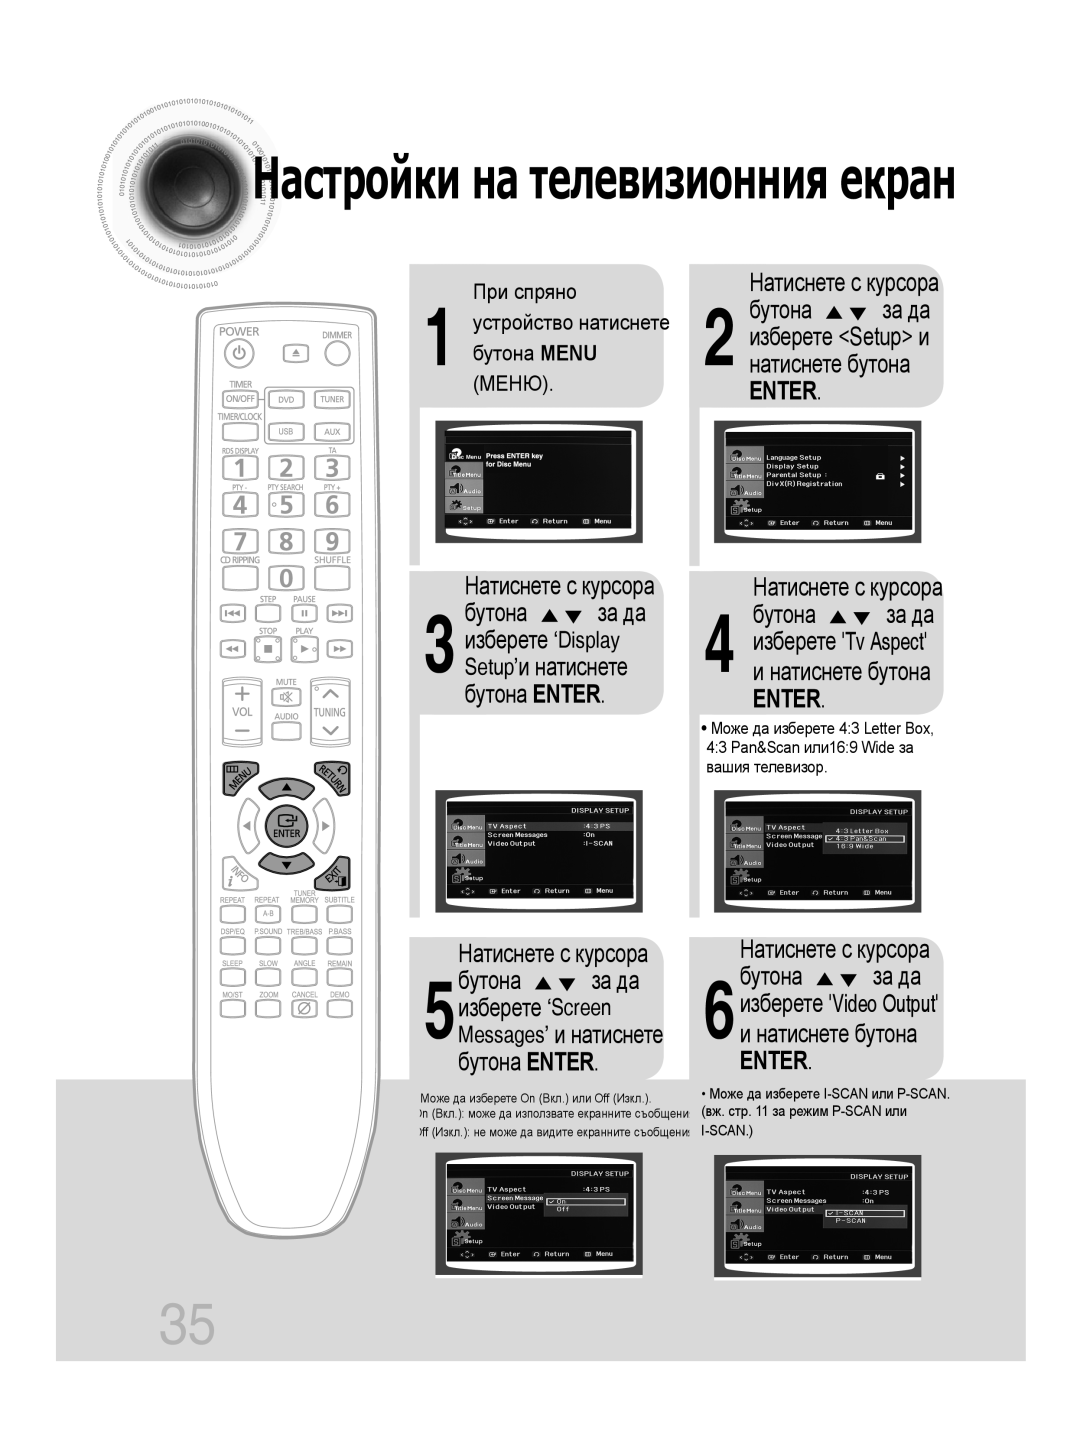 Samsung MM-C330D/EDC Еnter, 4 и натиснете бутона, 3бутона за да изберете ‘Display Setup’и натиснете бутона ЕNTER, Меню 